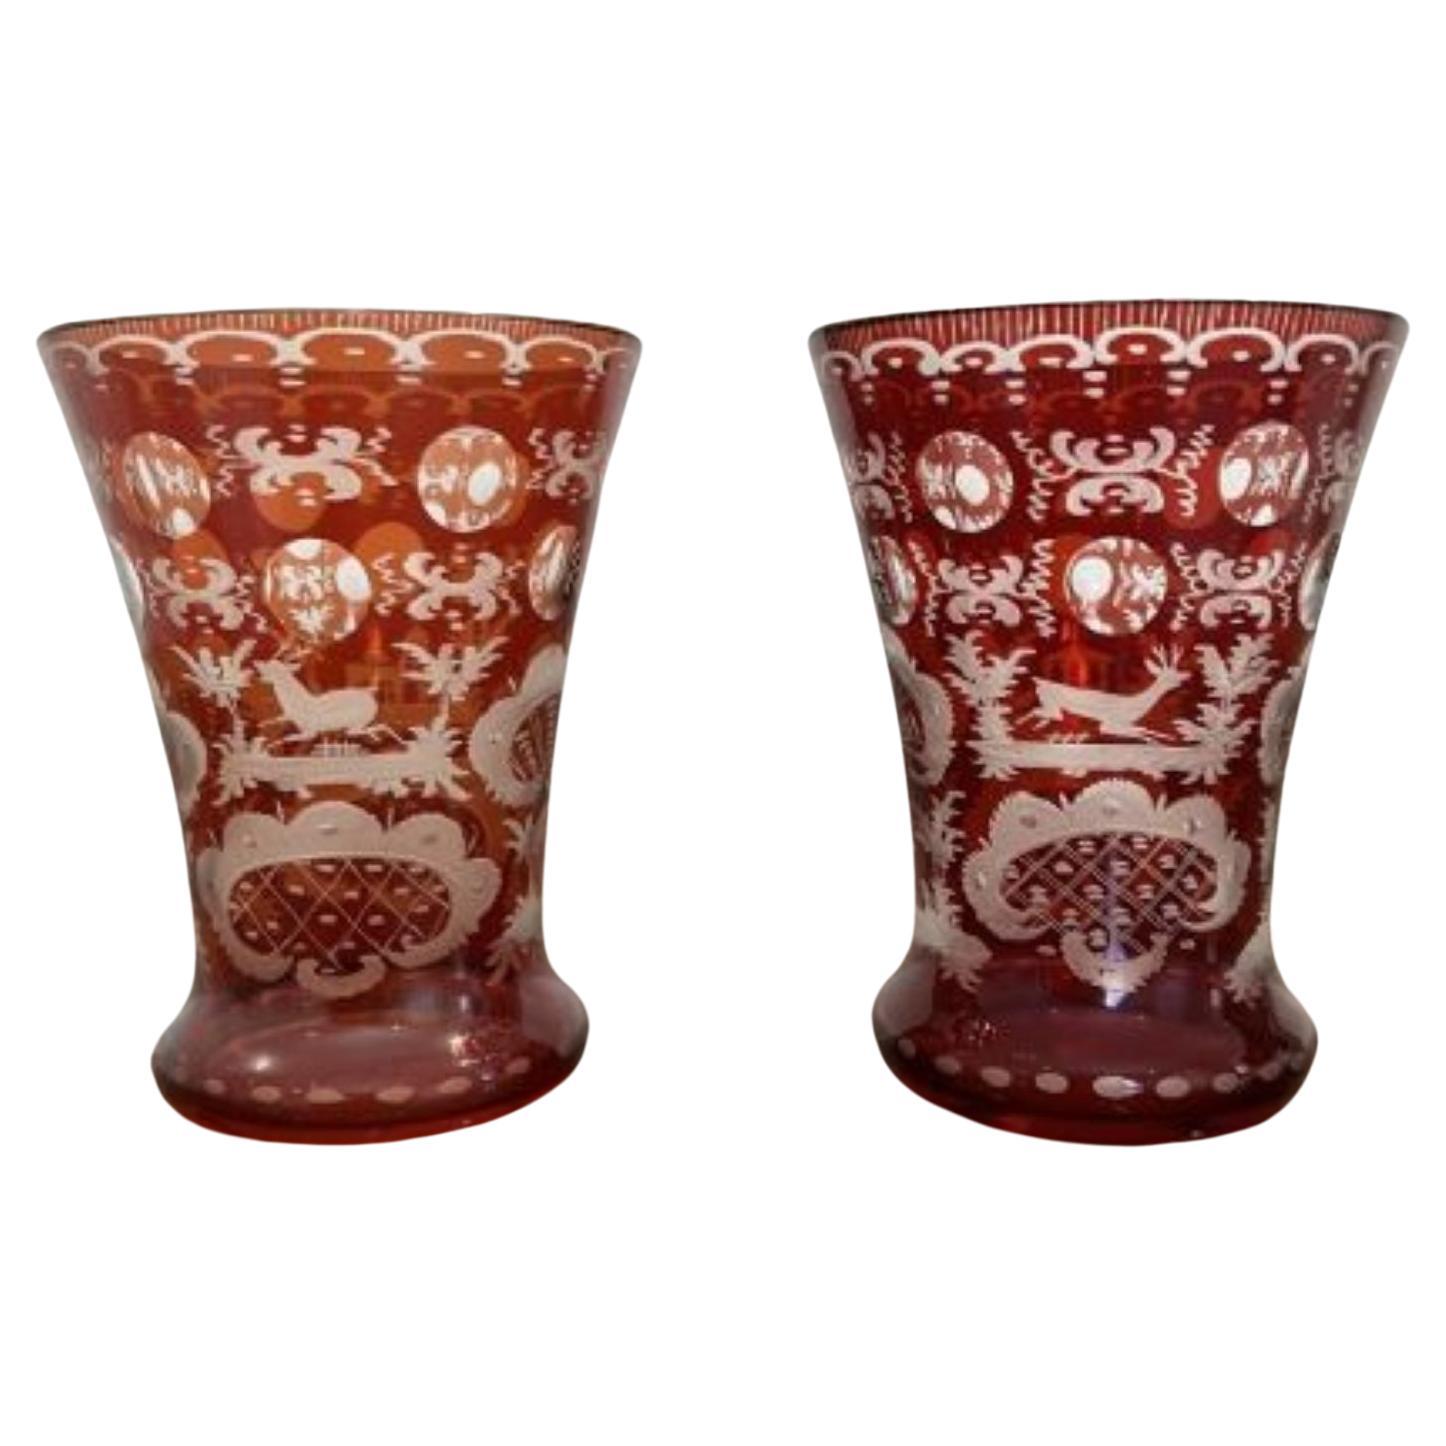 Wonderful quality pair of antique Victorian beakers